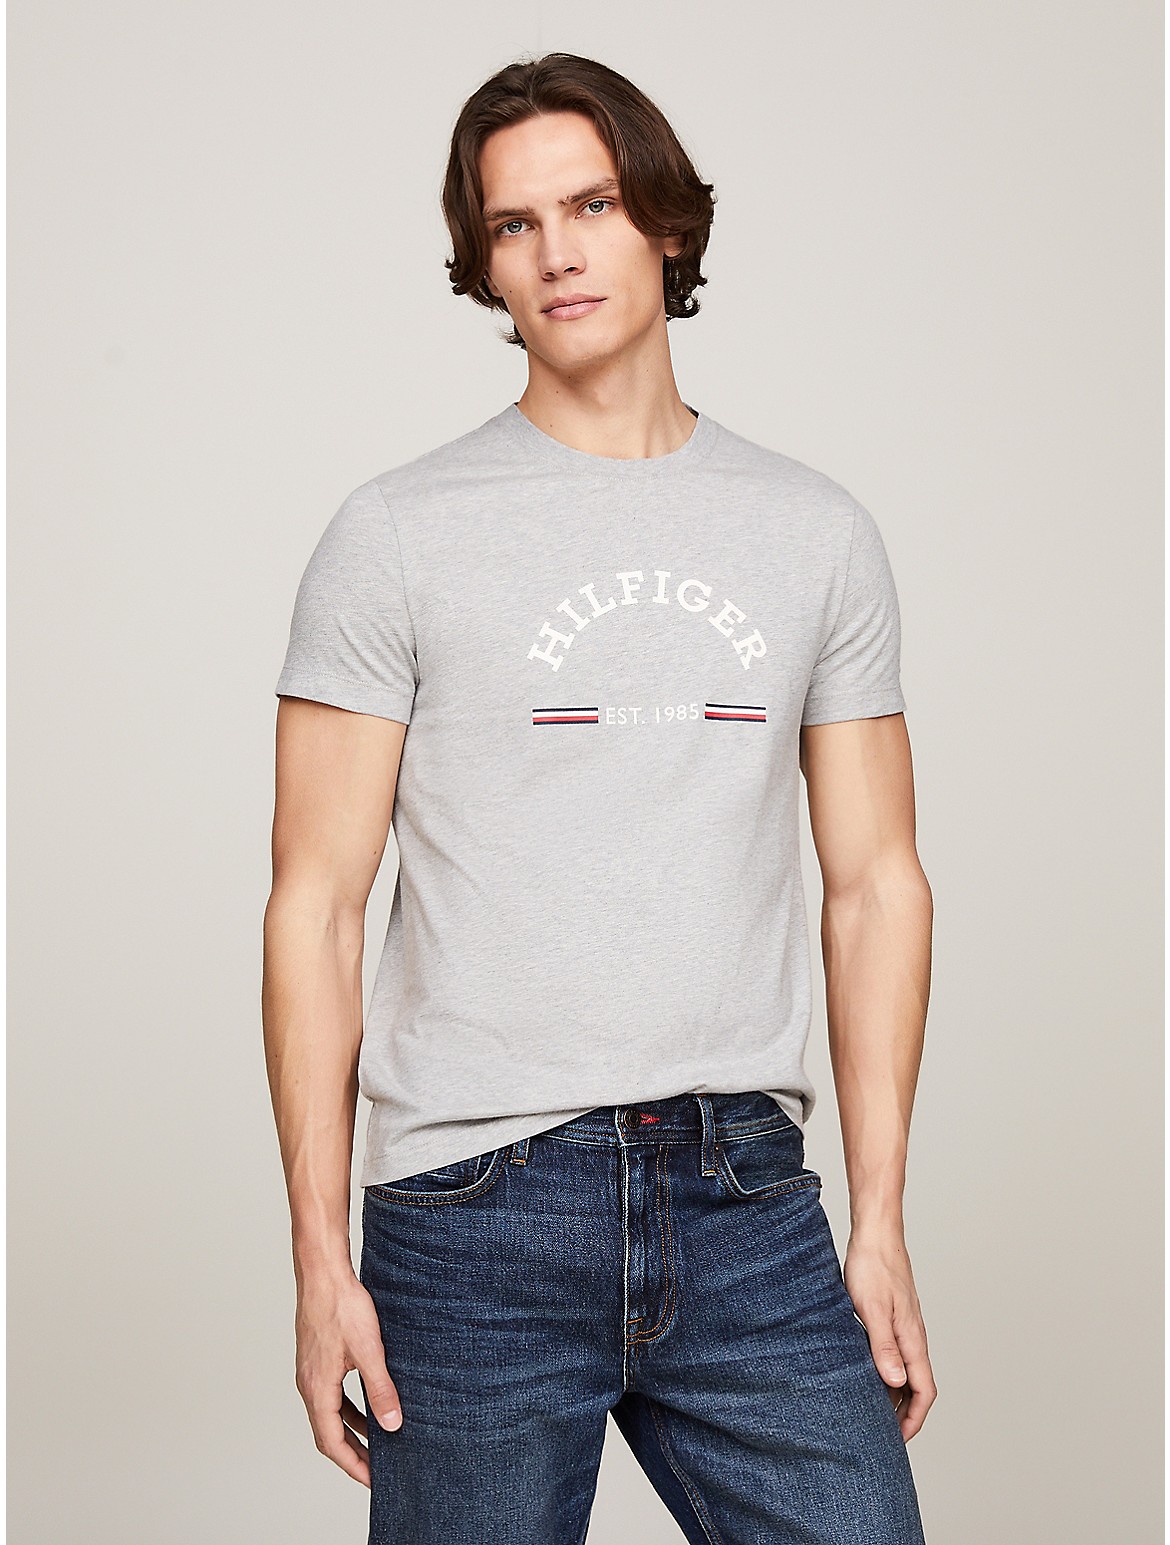 Tommy Hilfiger Men's Slim Fit Arch Monotype Graphic T-Shirt